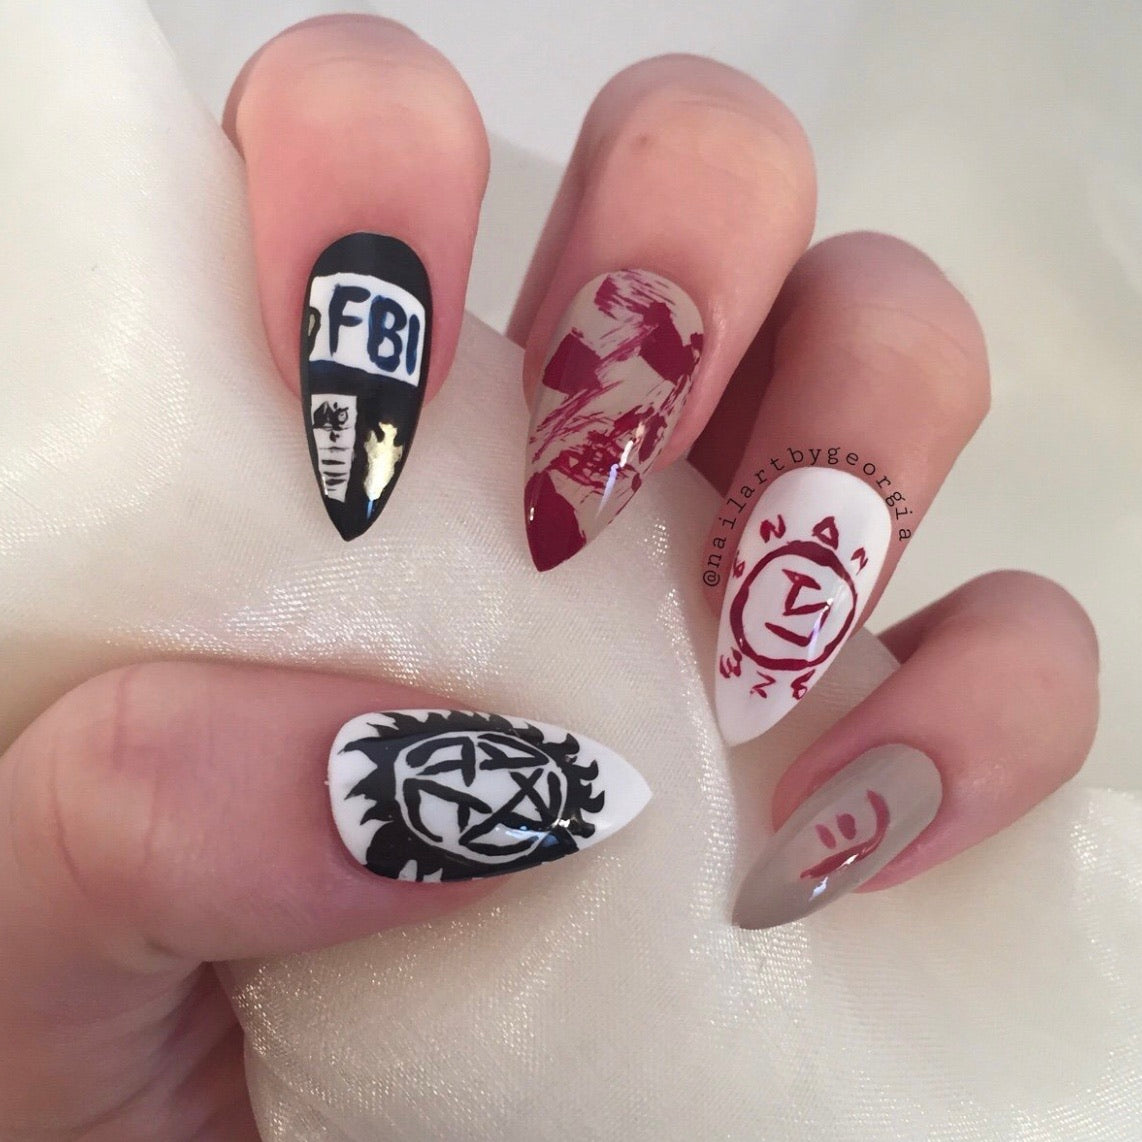 Supernatural themed stiletto nails